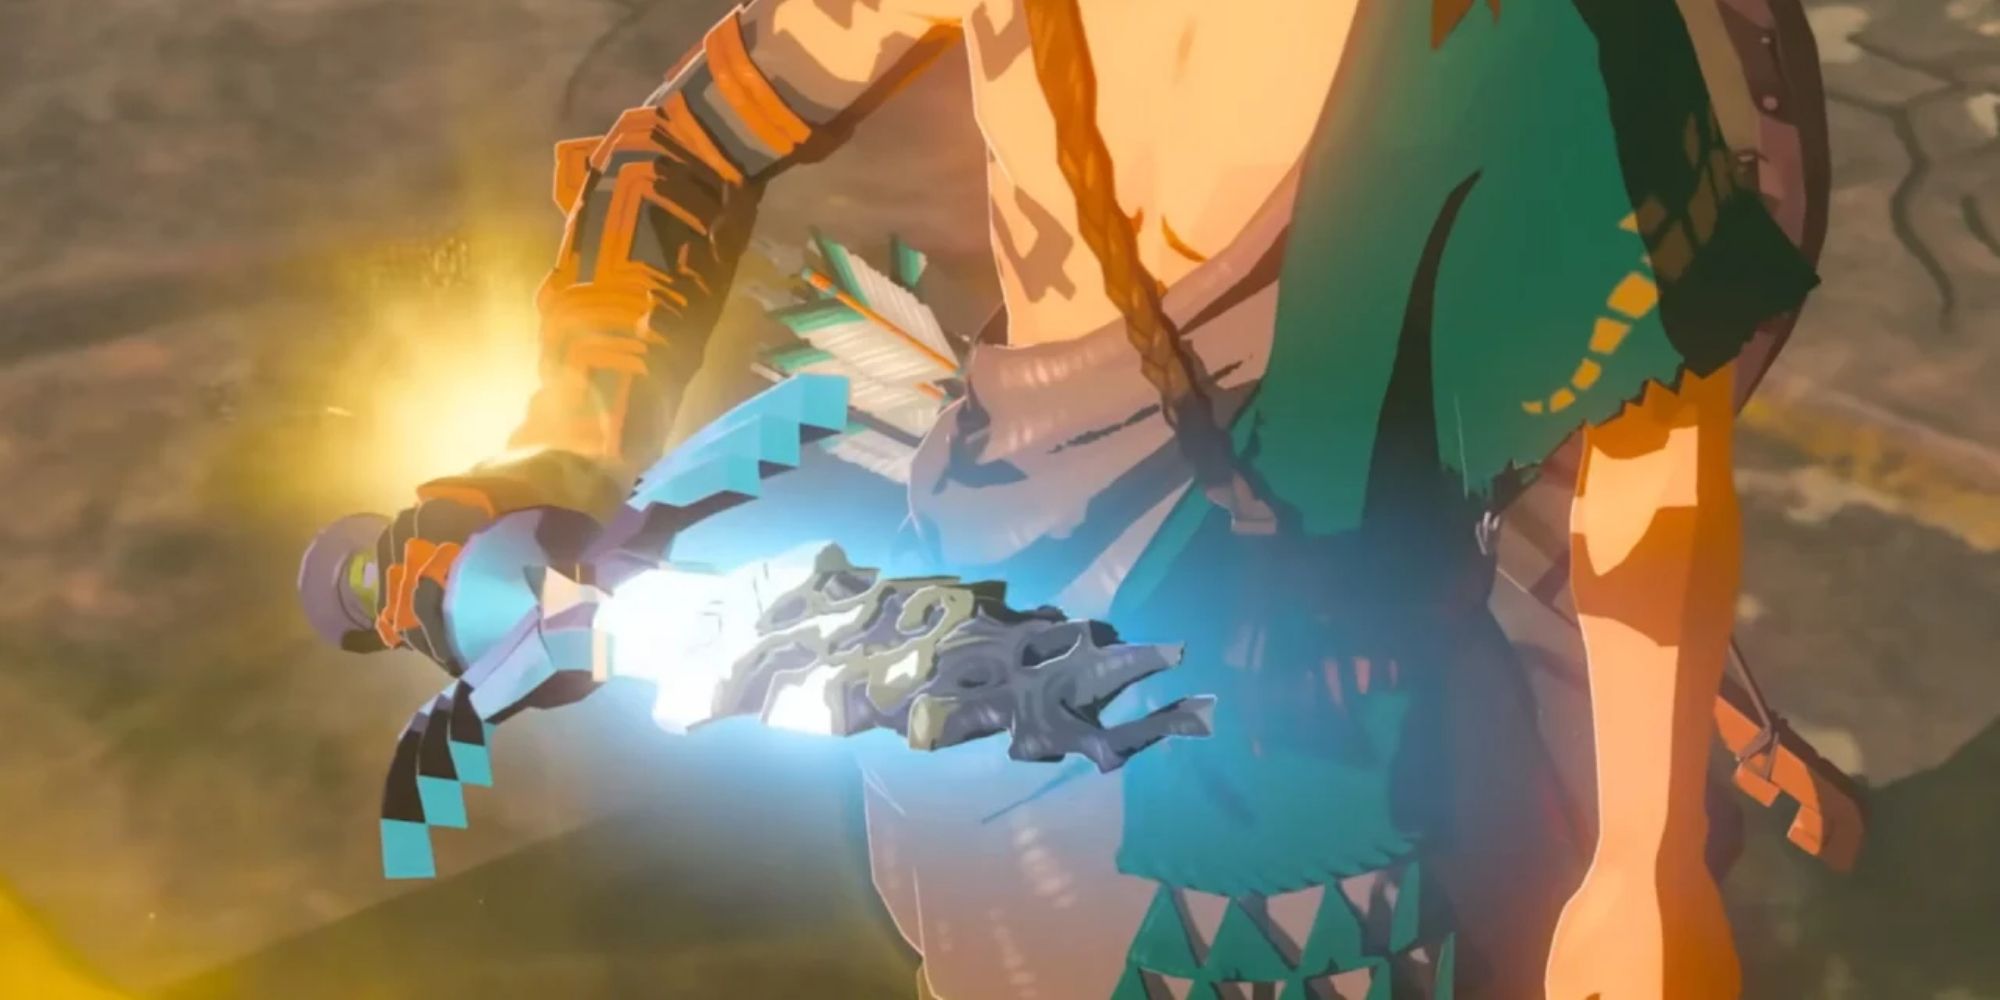 Link holding a broken Master Sword